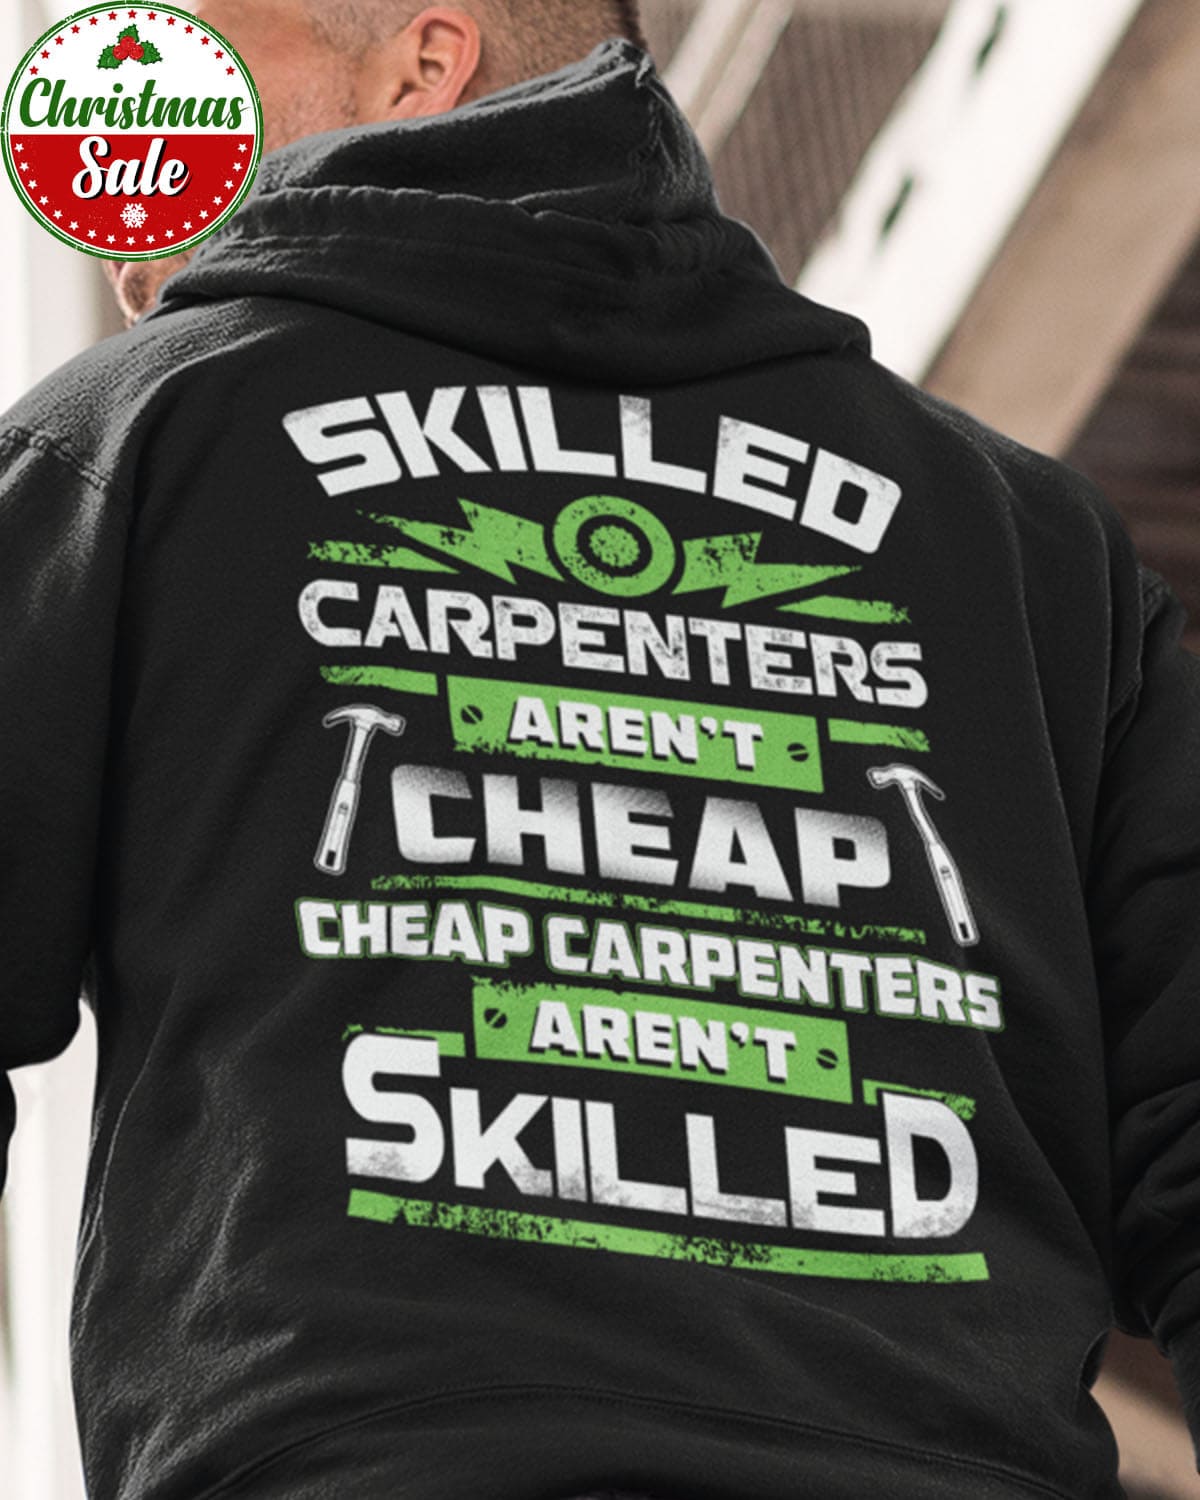 Skilled carpenter aren't cheap cheap carpenters aren't skilled